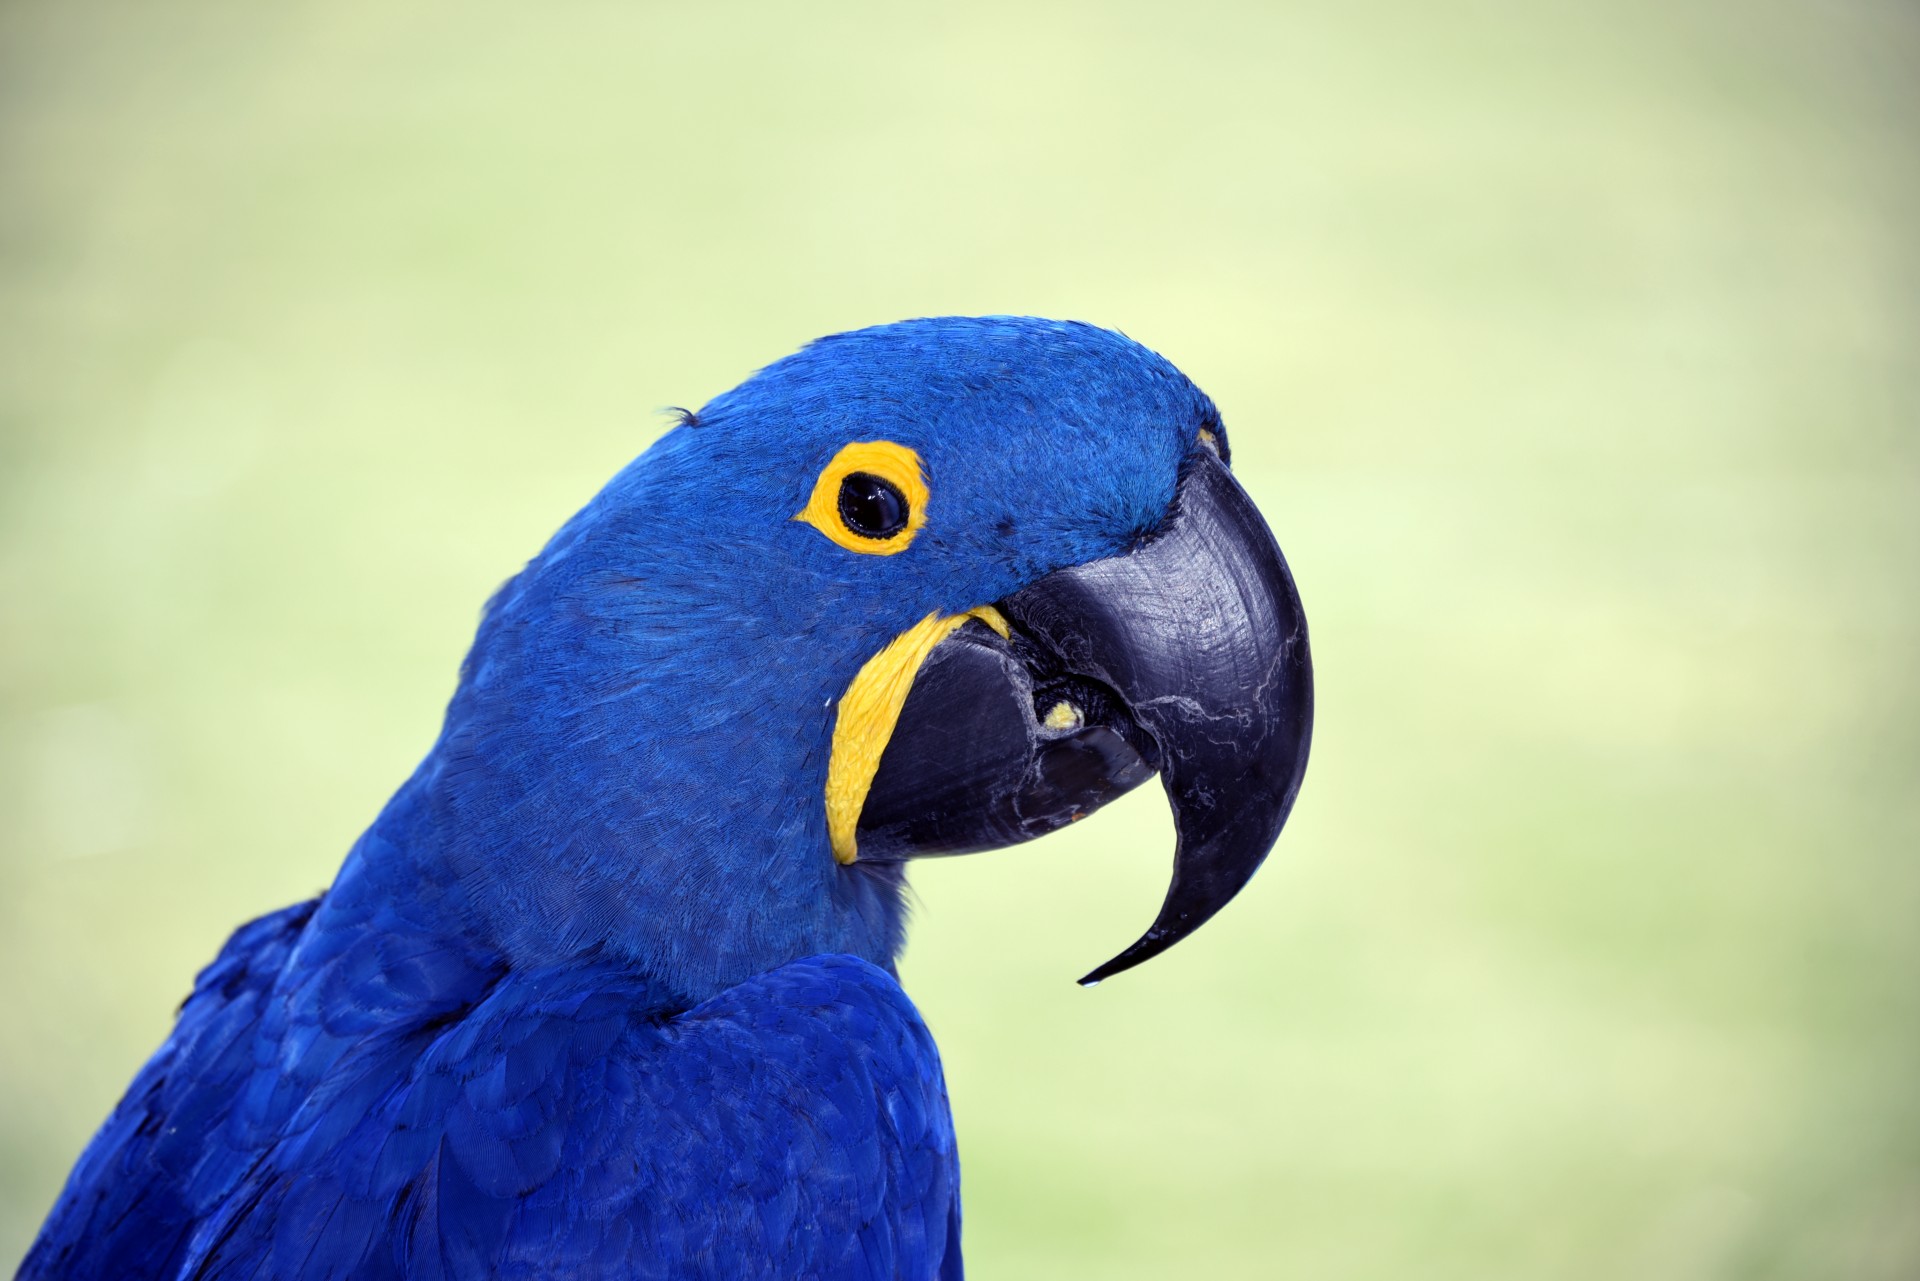 Blue Macaw Bird